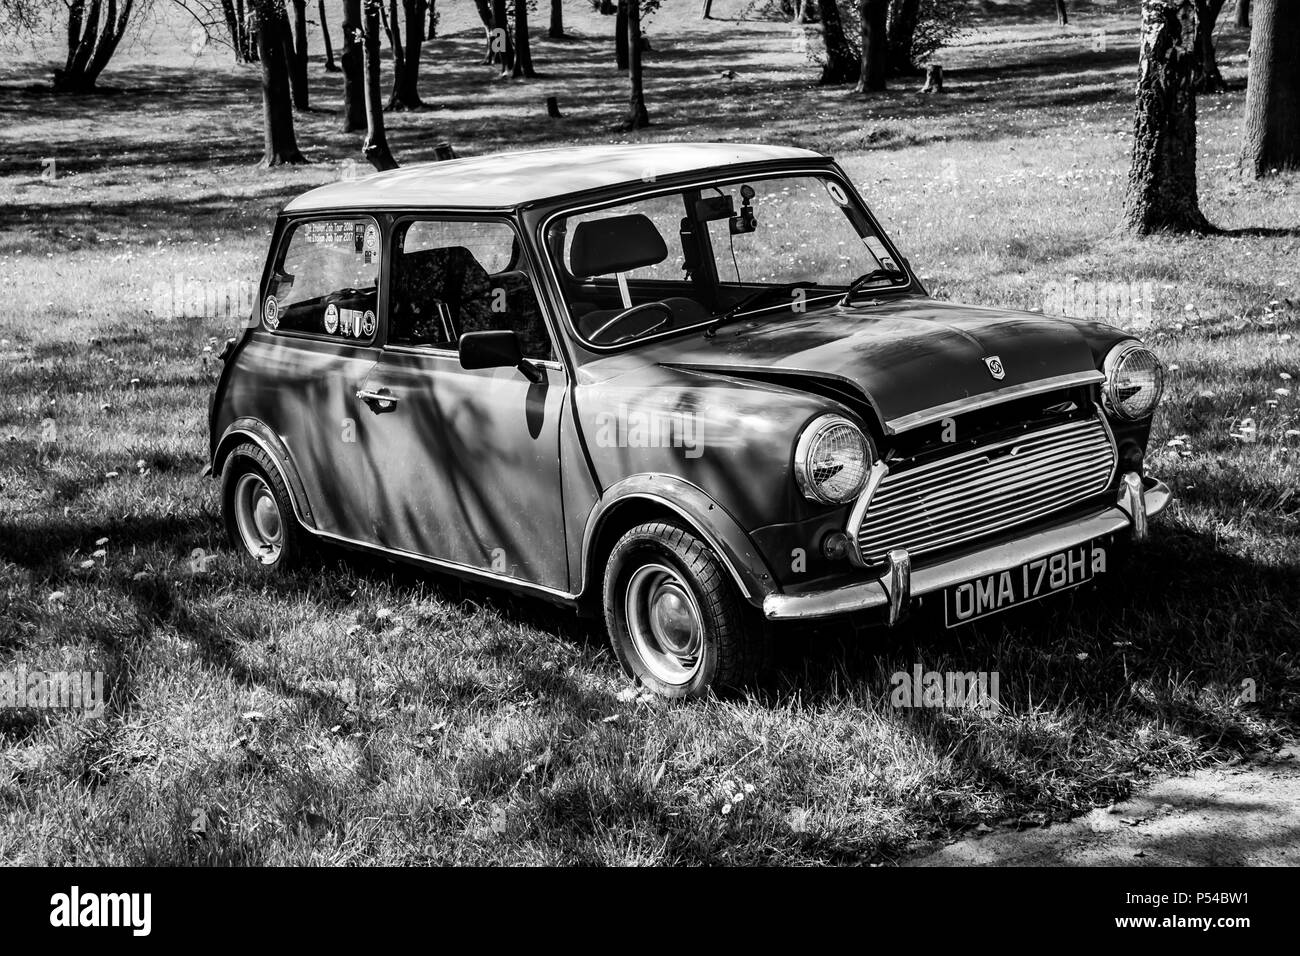 A classic Mini automobile. Stock Photo